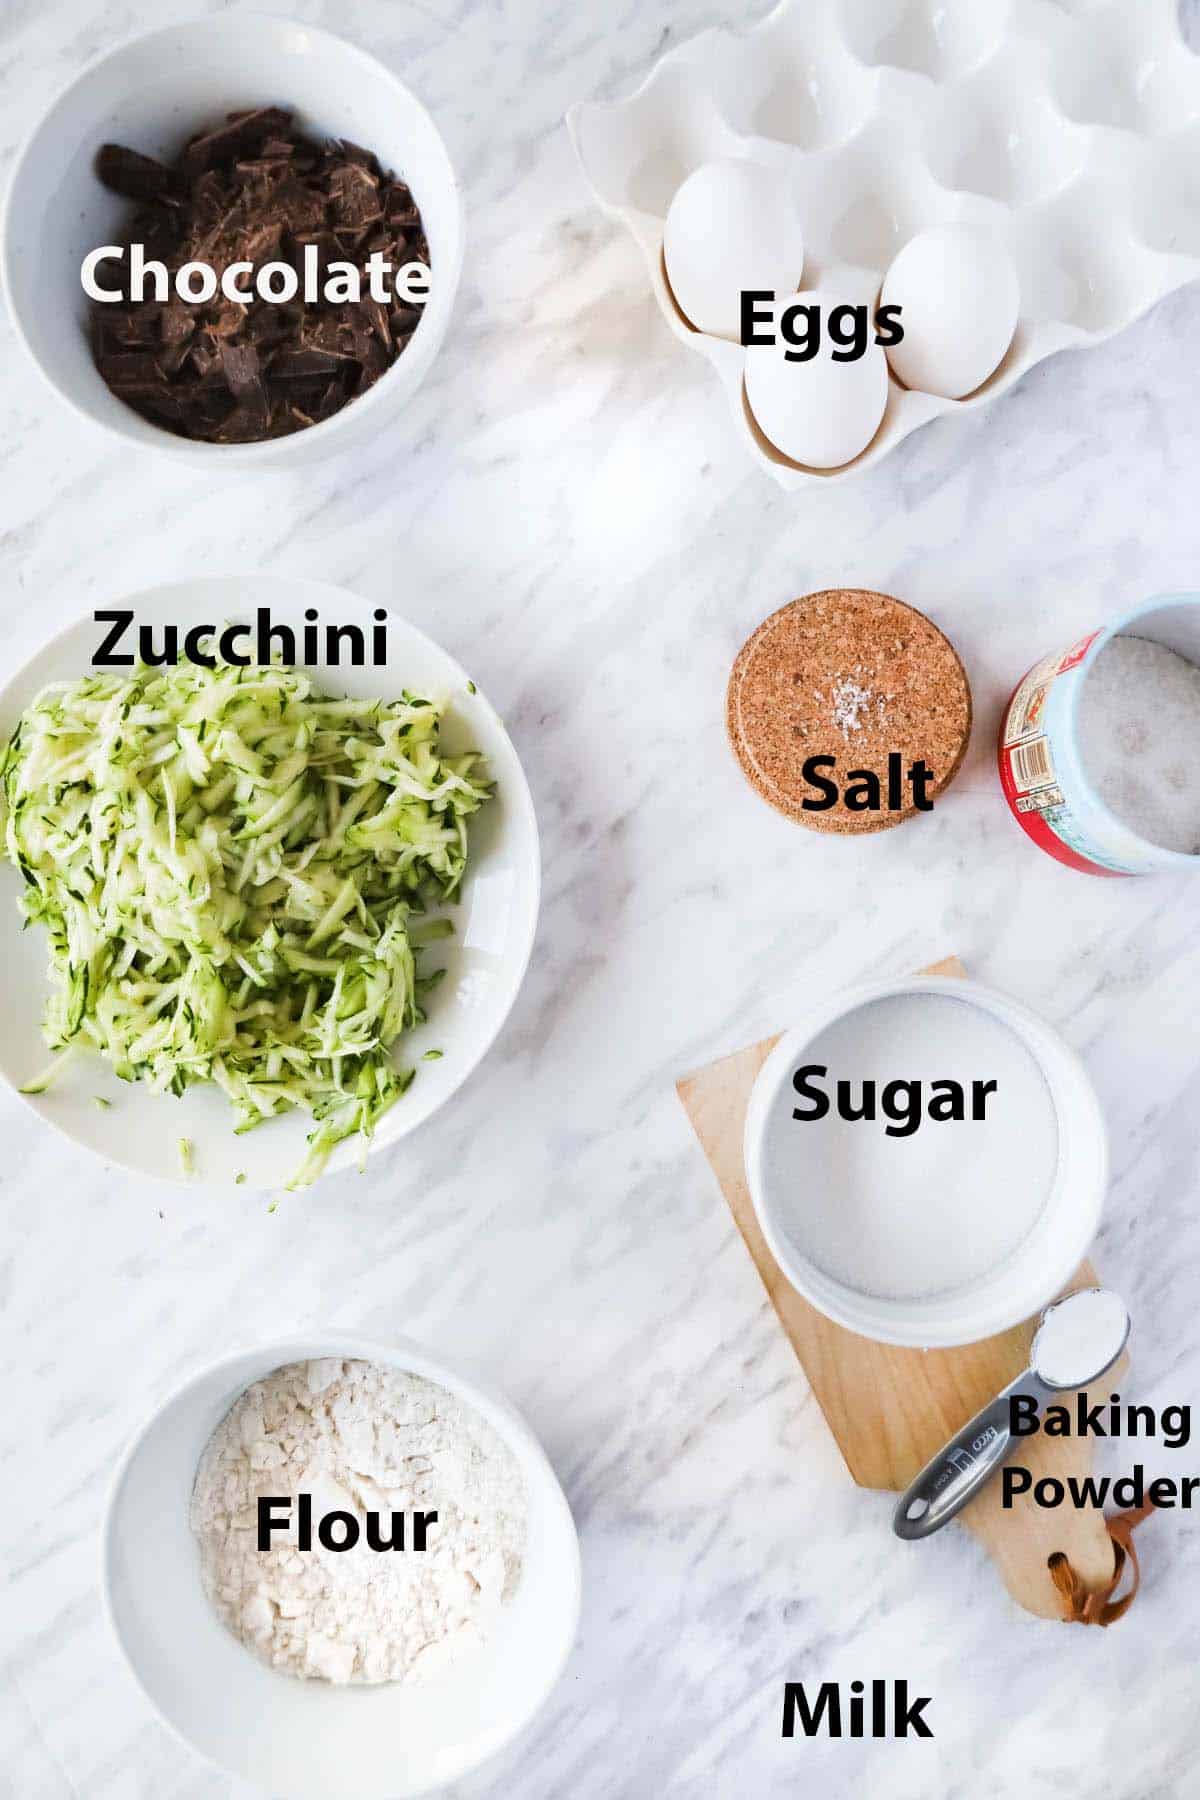 Labelled ingredients in bowls and ramekins: eggs, chocolate, shredded zucchini, salt, sugar, flour and baking powder.